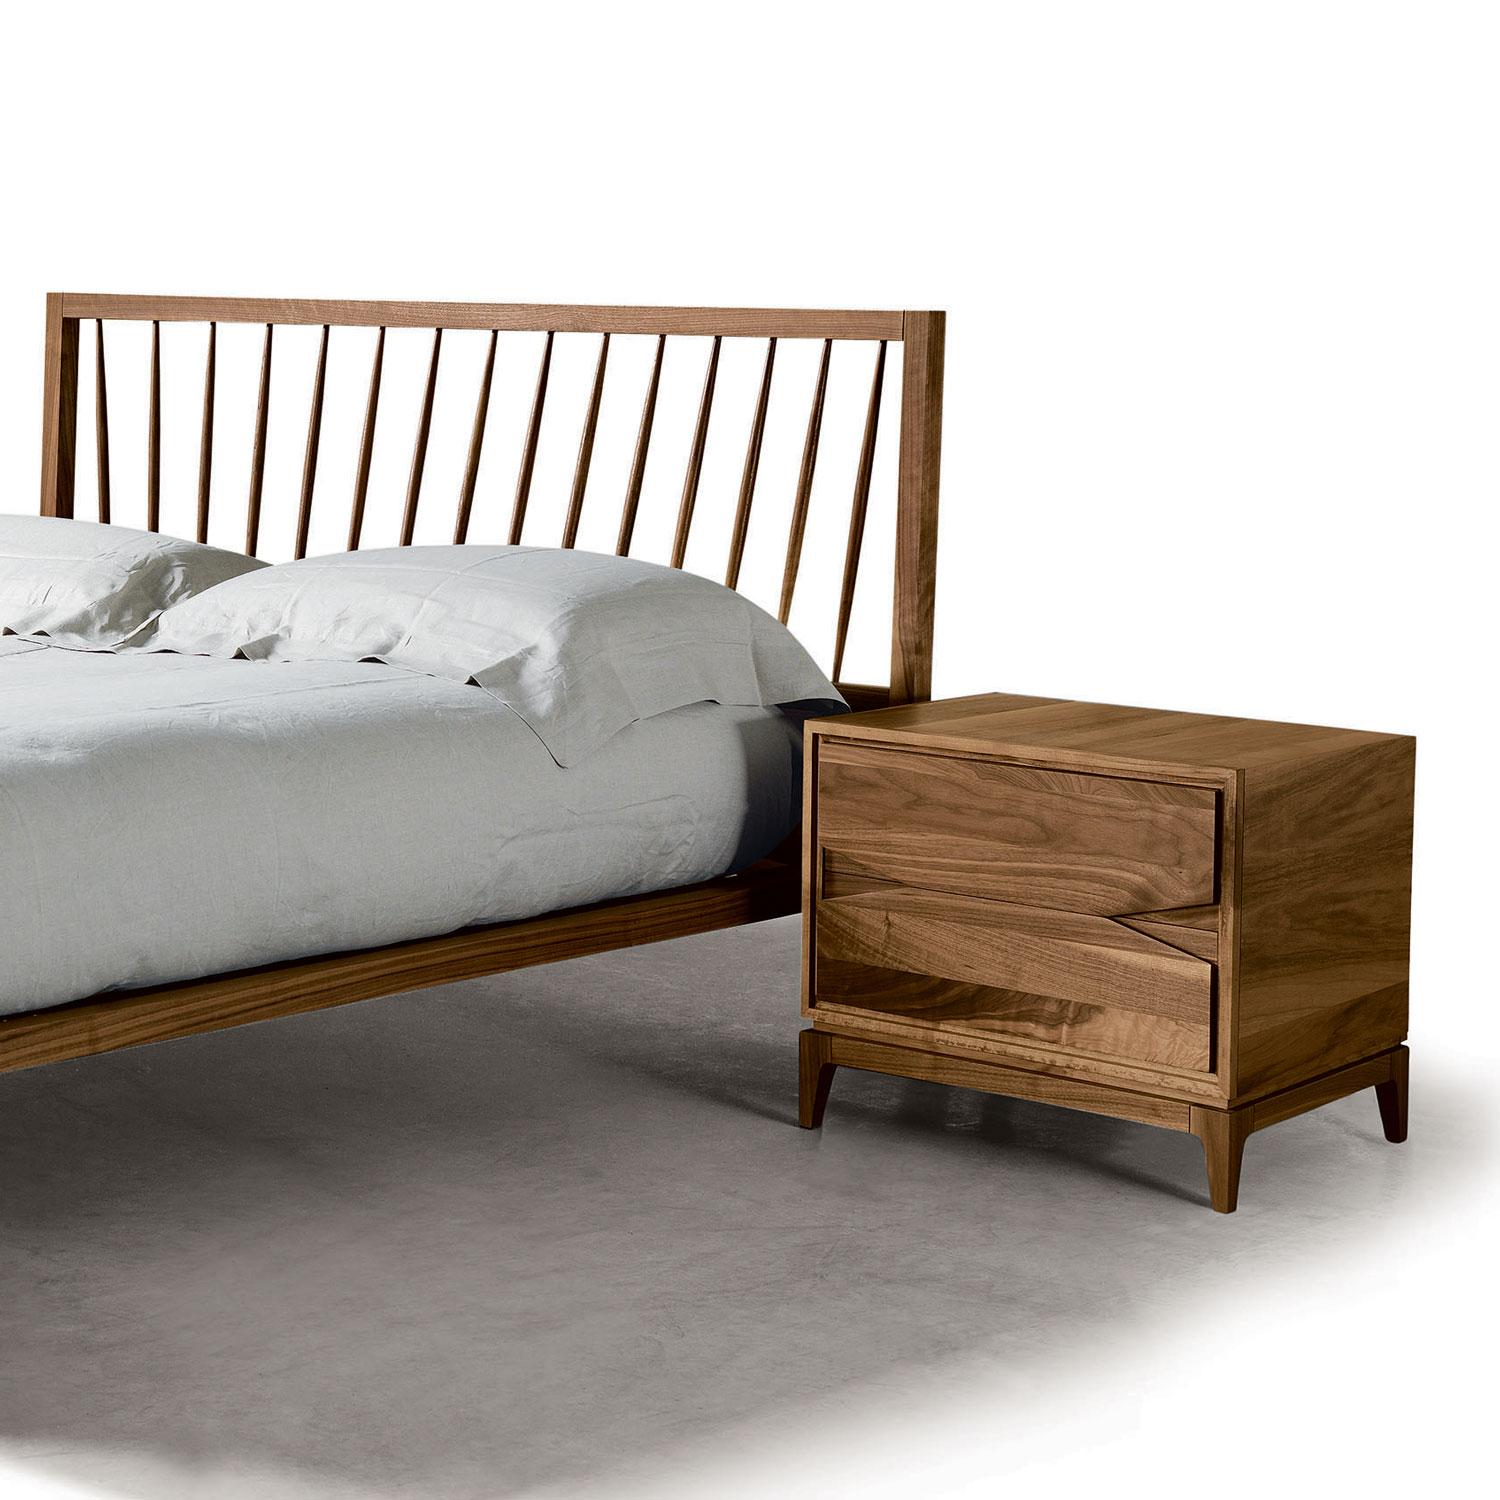 natural wood bedside table